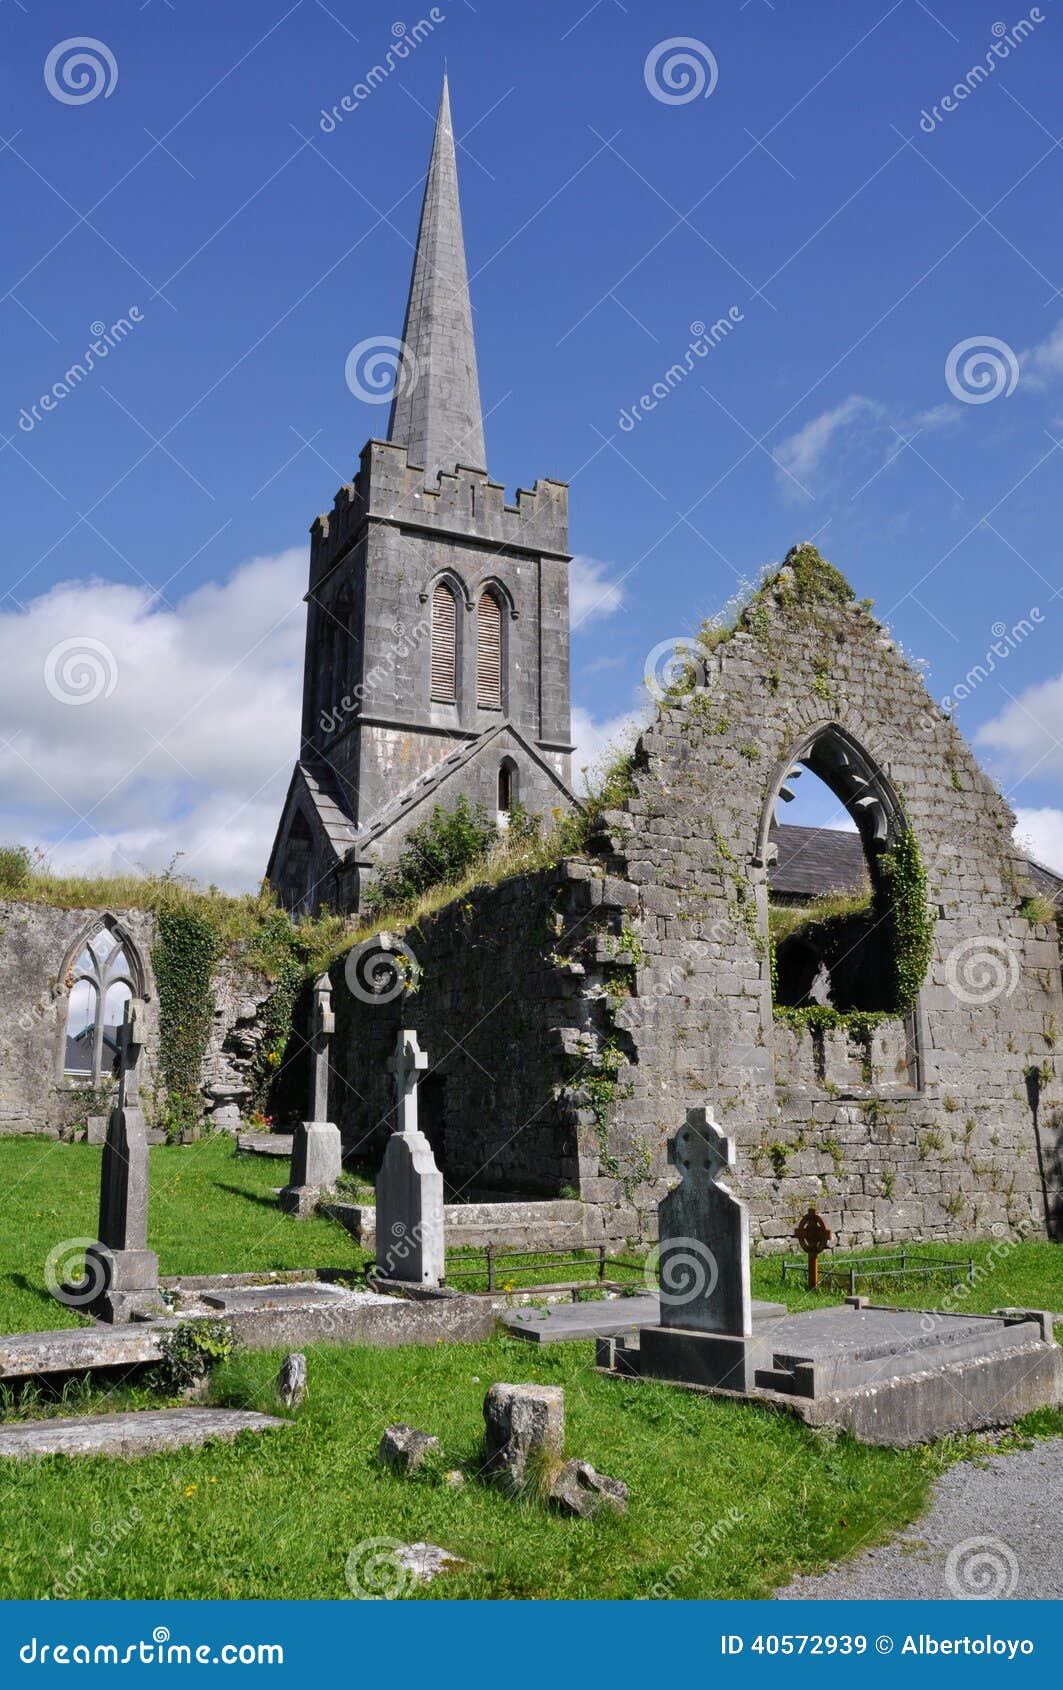 st mary's parish church, athenry, ireland